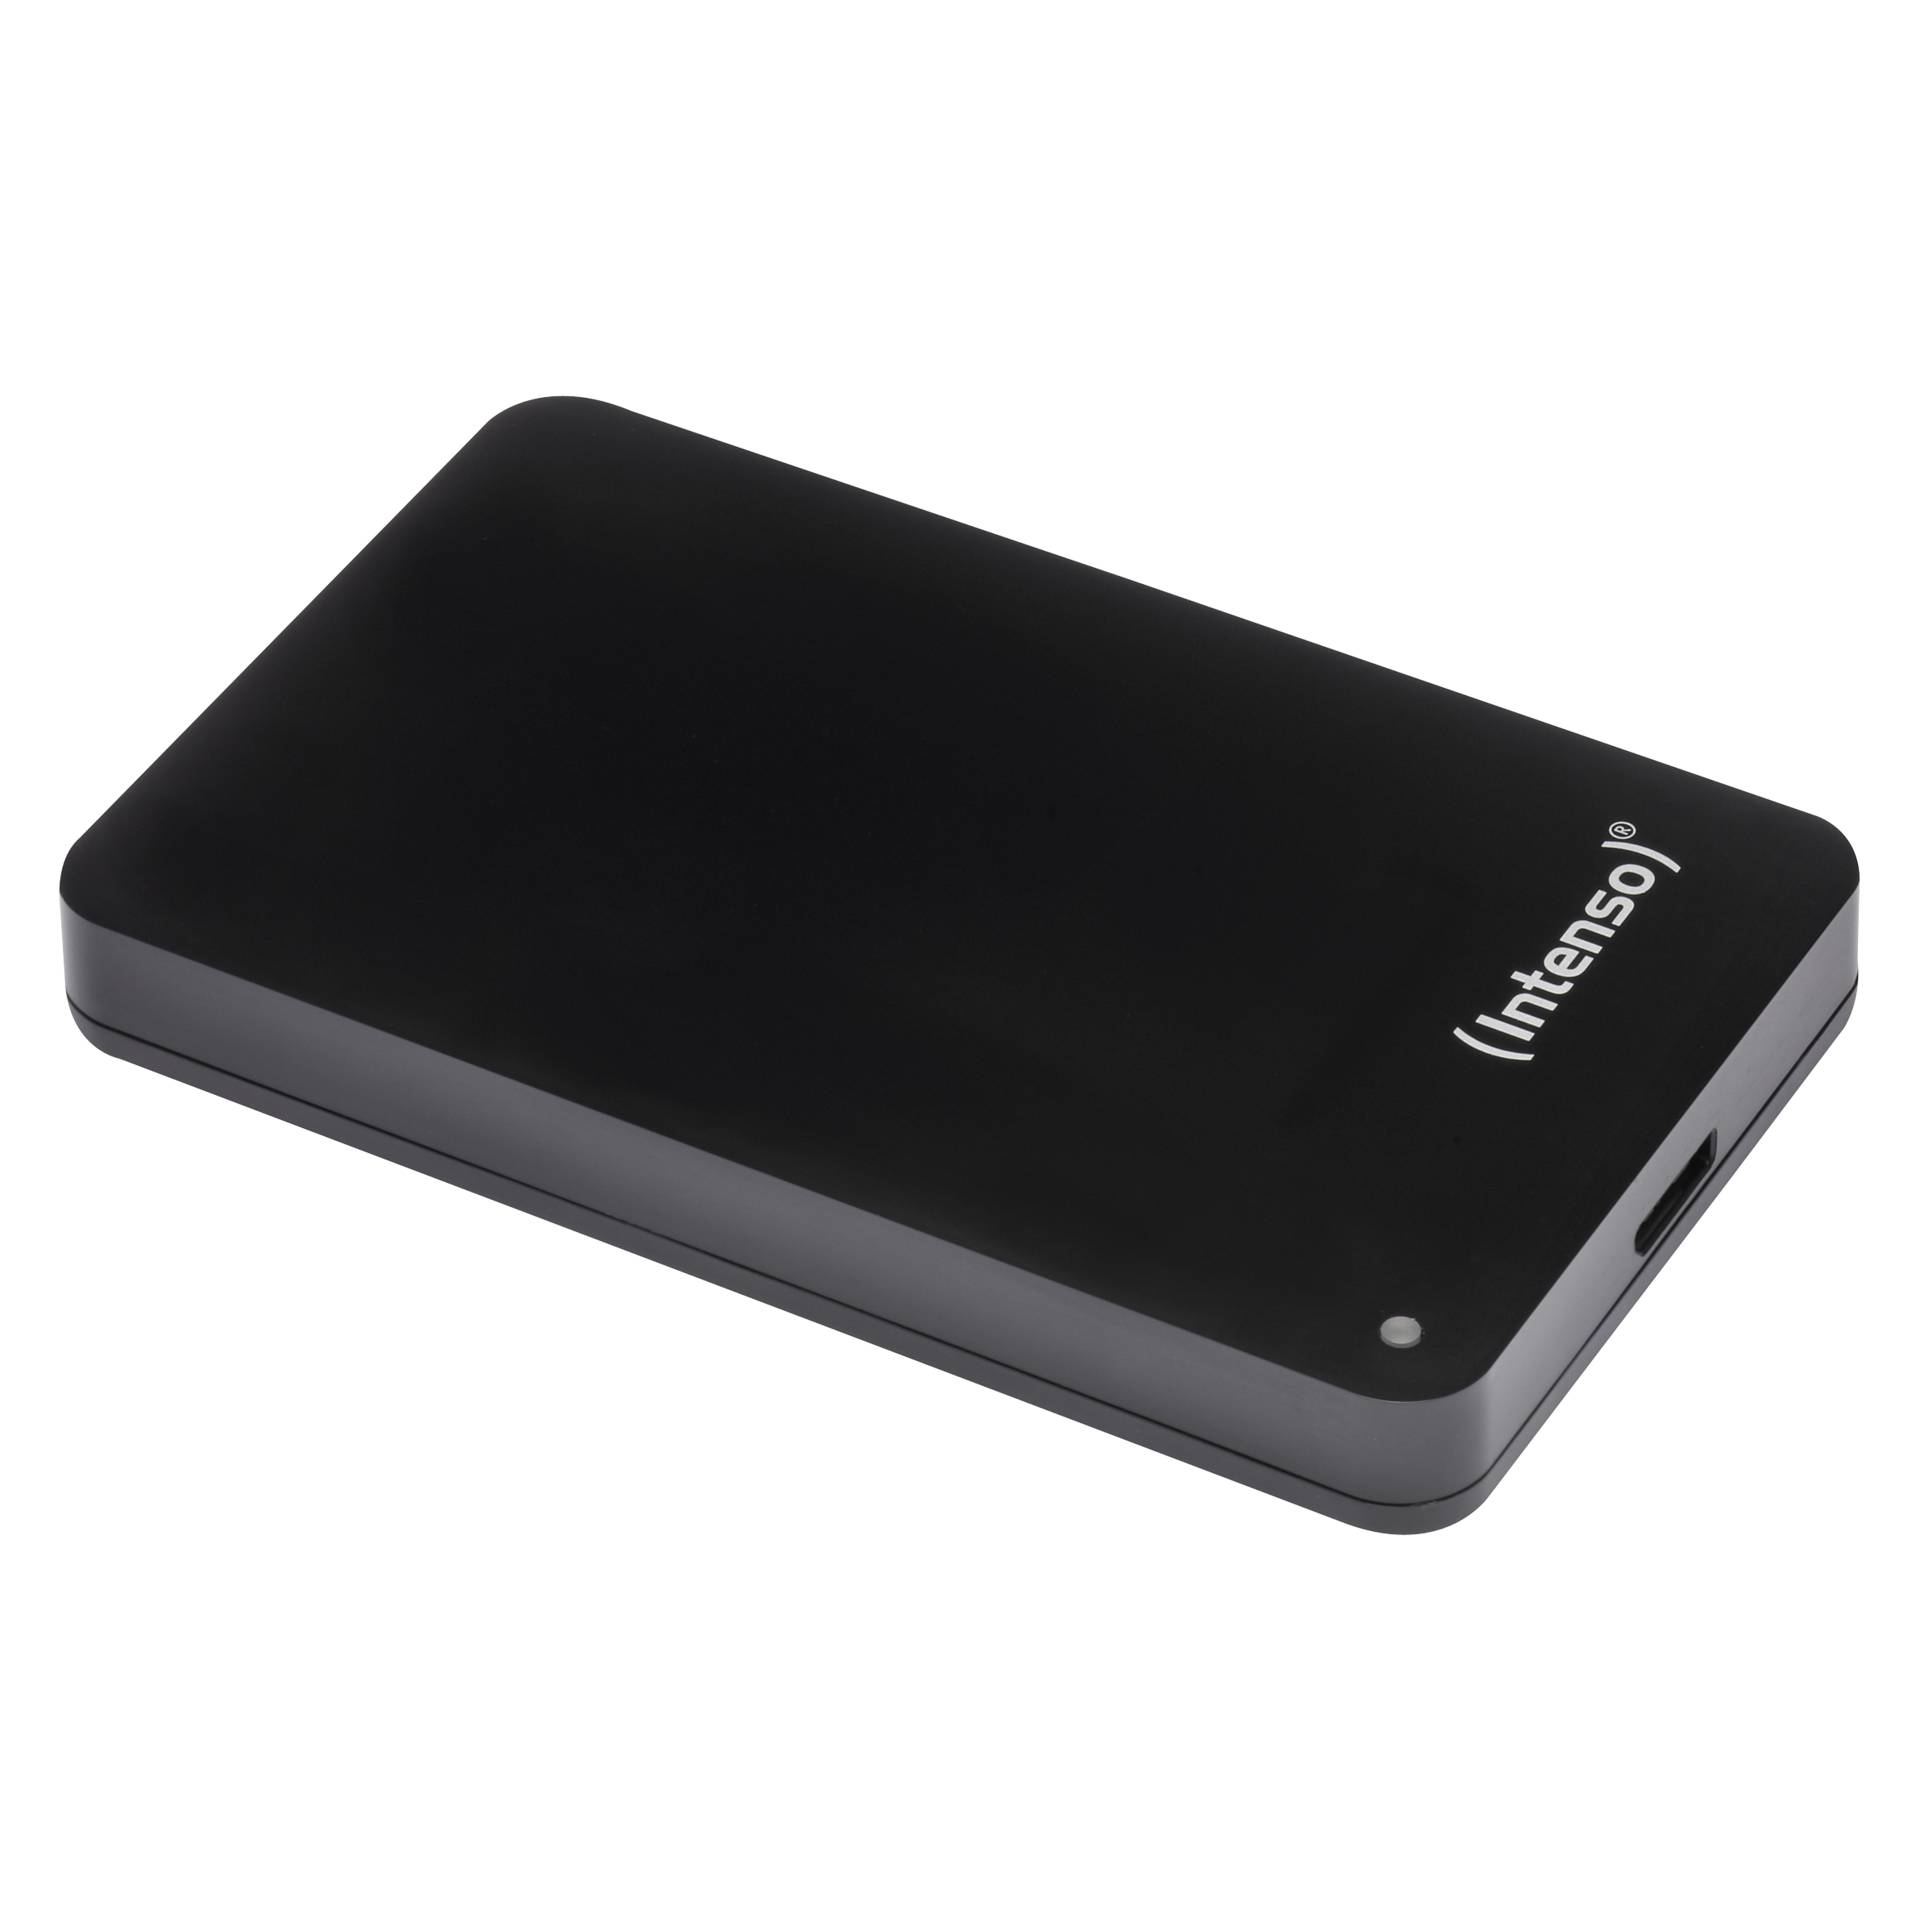 4.0 TB HDD Intenso Memory Case schwarz 2,5 Zoll / 6.35cm USB 3.0